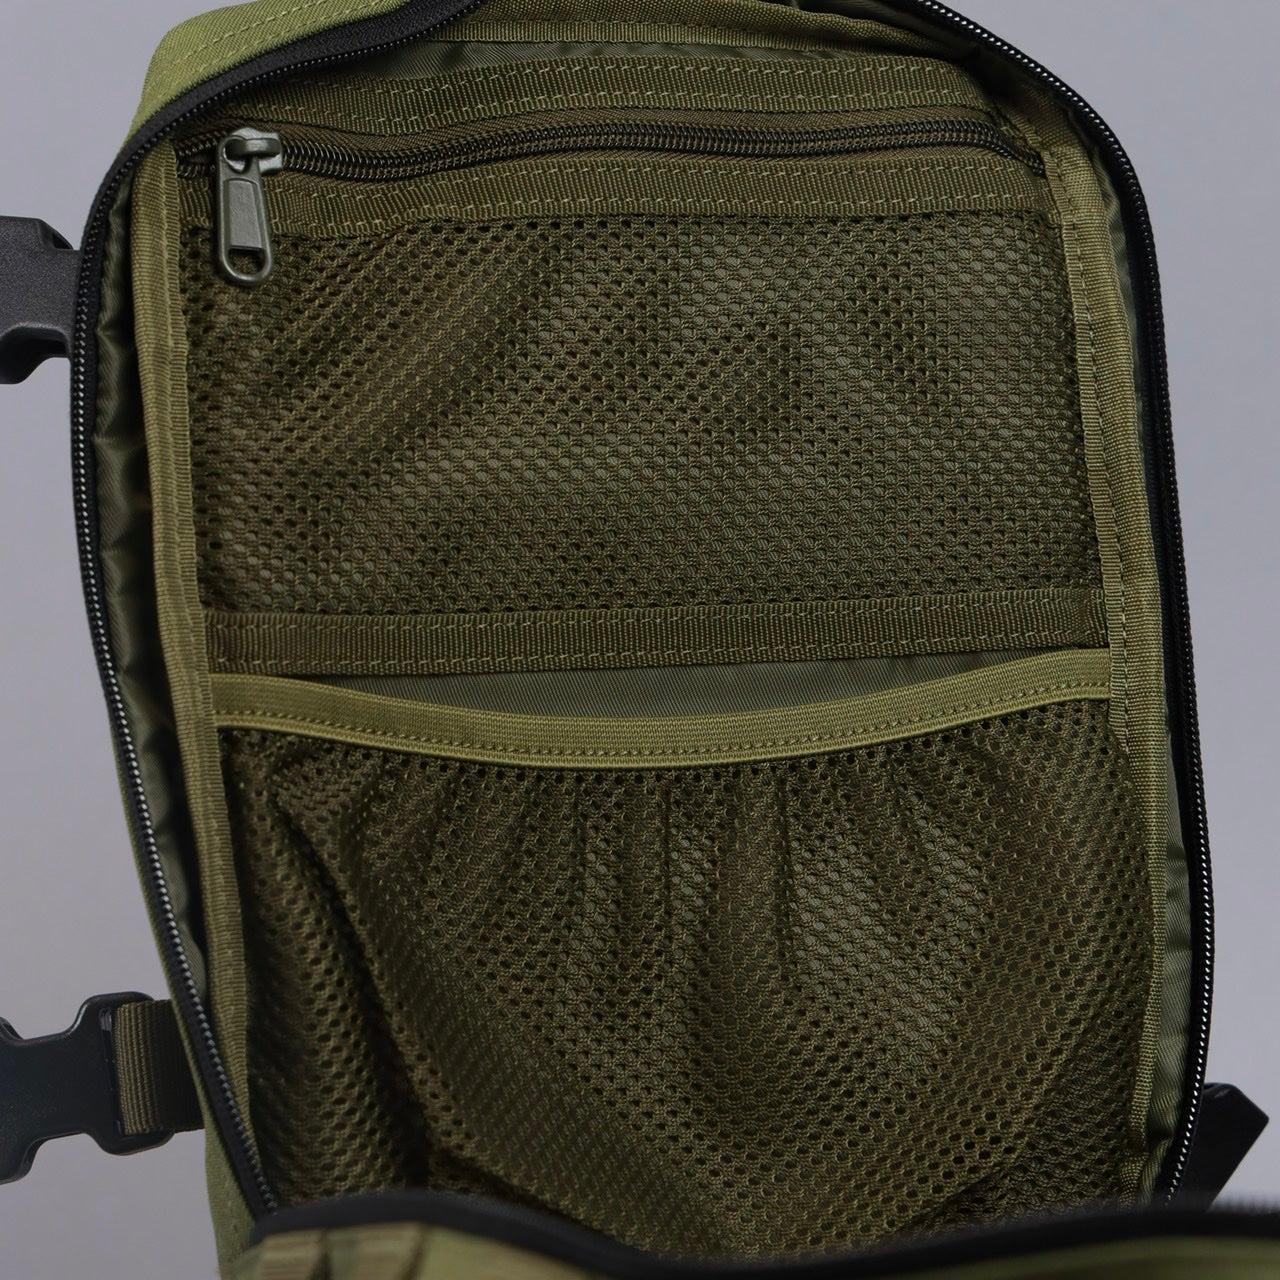 9L Backpack Mini Athletic Green